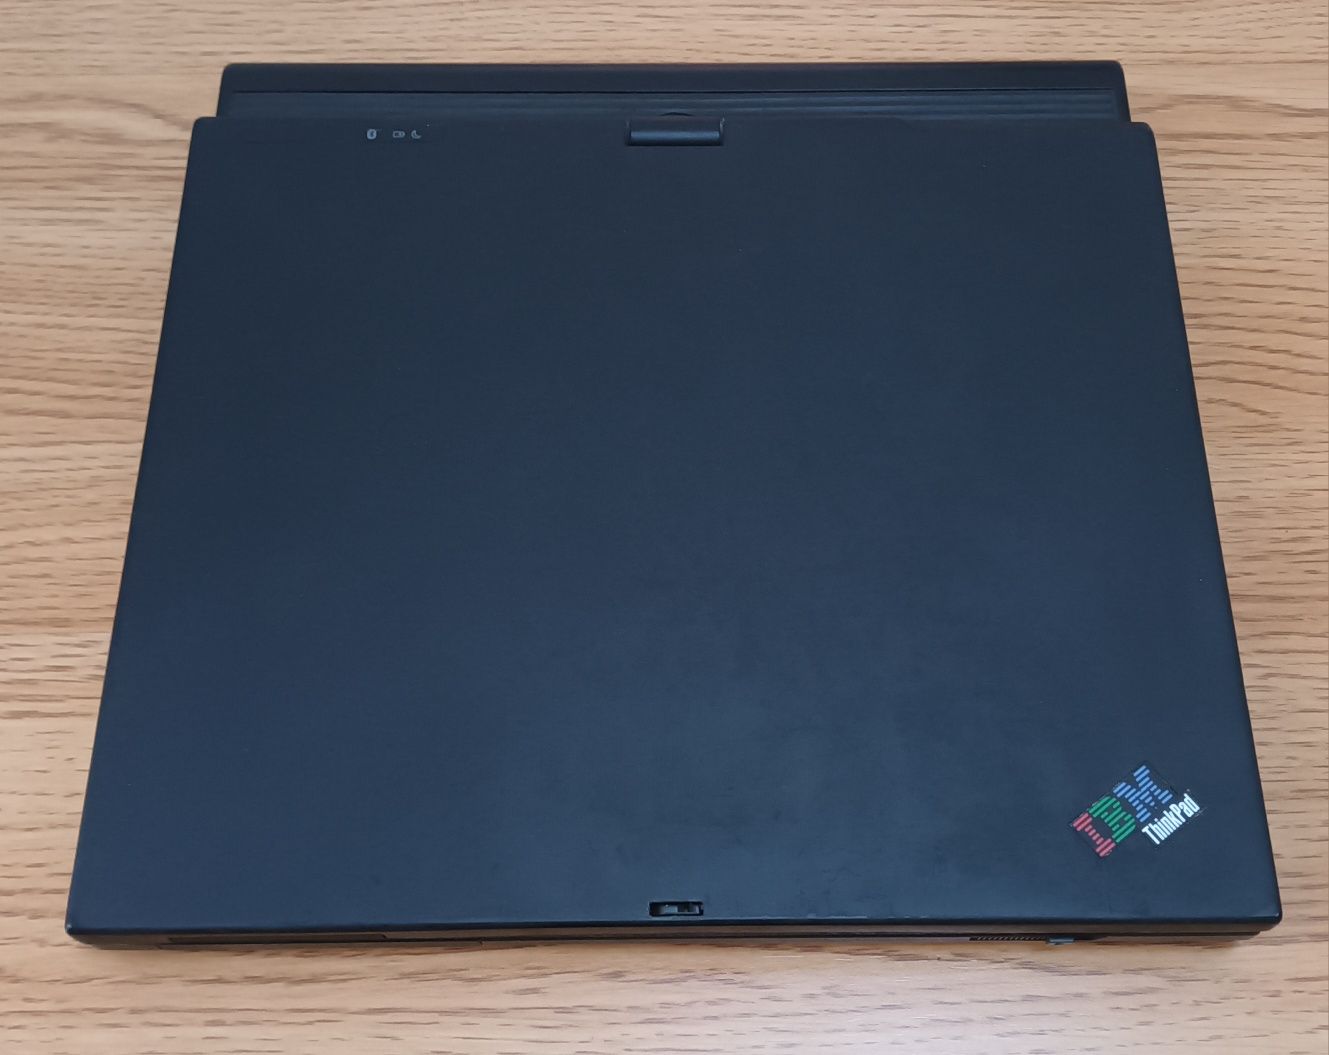 IBM Thinkpad X41 com ecrã Touch